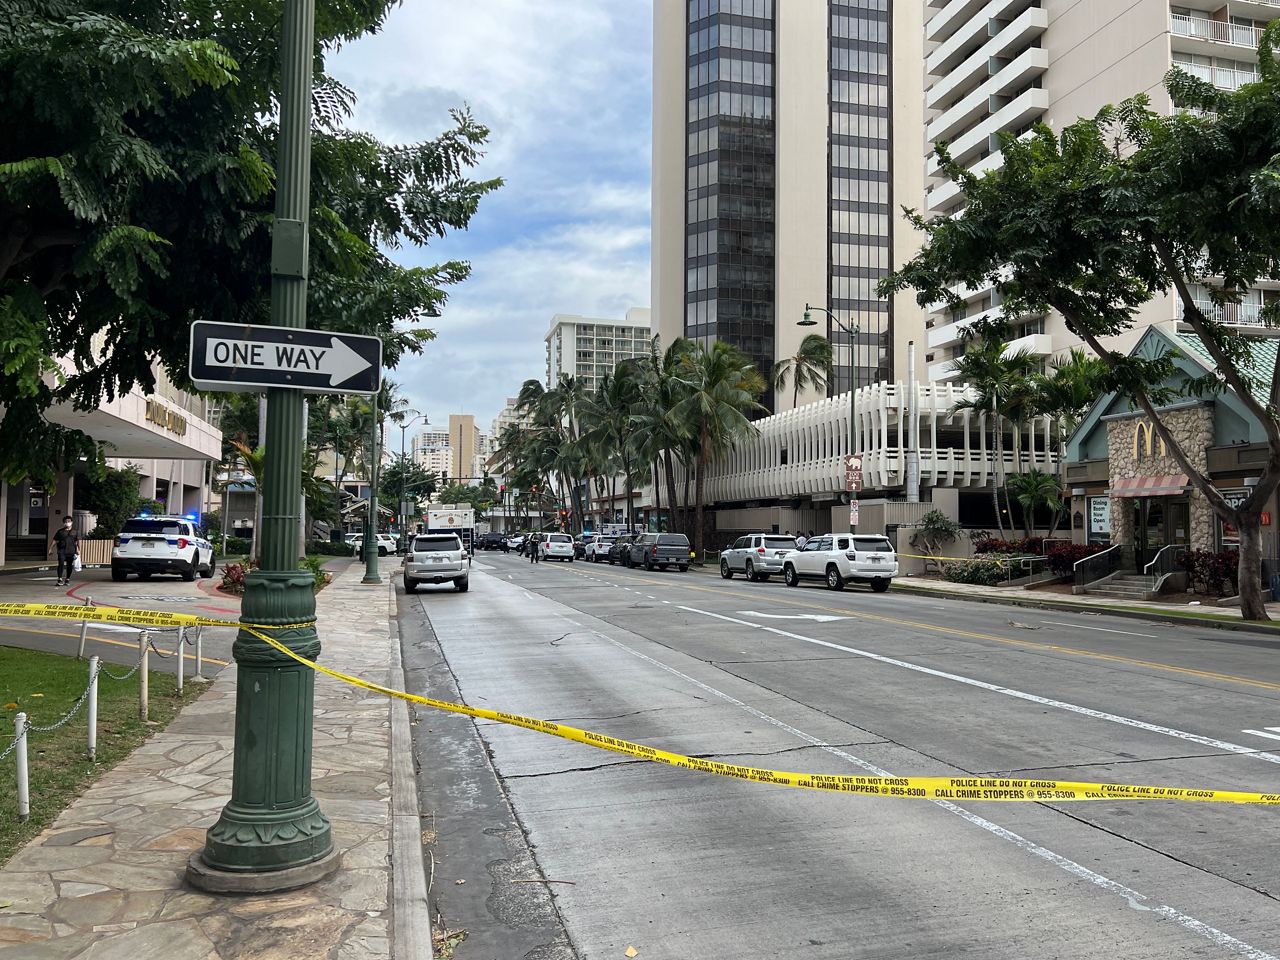 Kuhio Avenue at Royal Hawaiian Avenue was cordoned off as a precaution. (Spectrum News/Ryan Cooper)